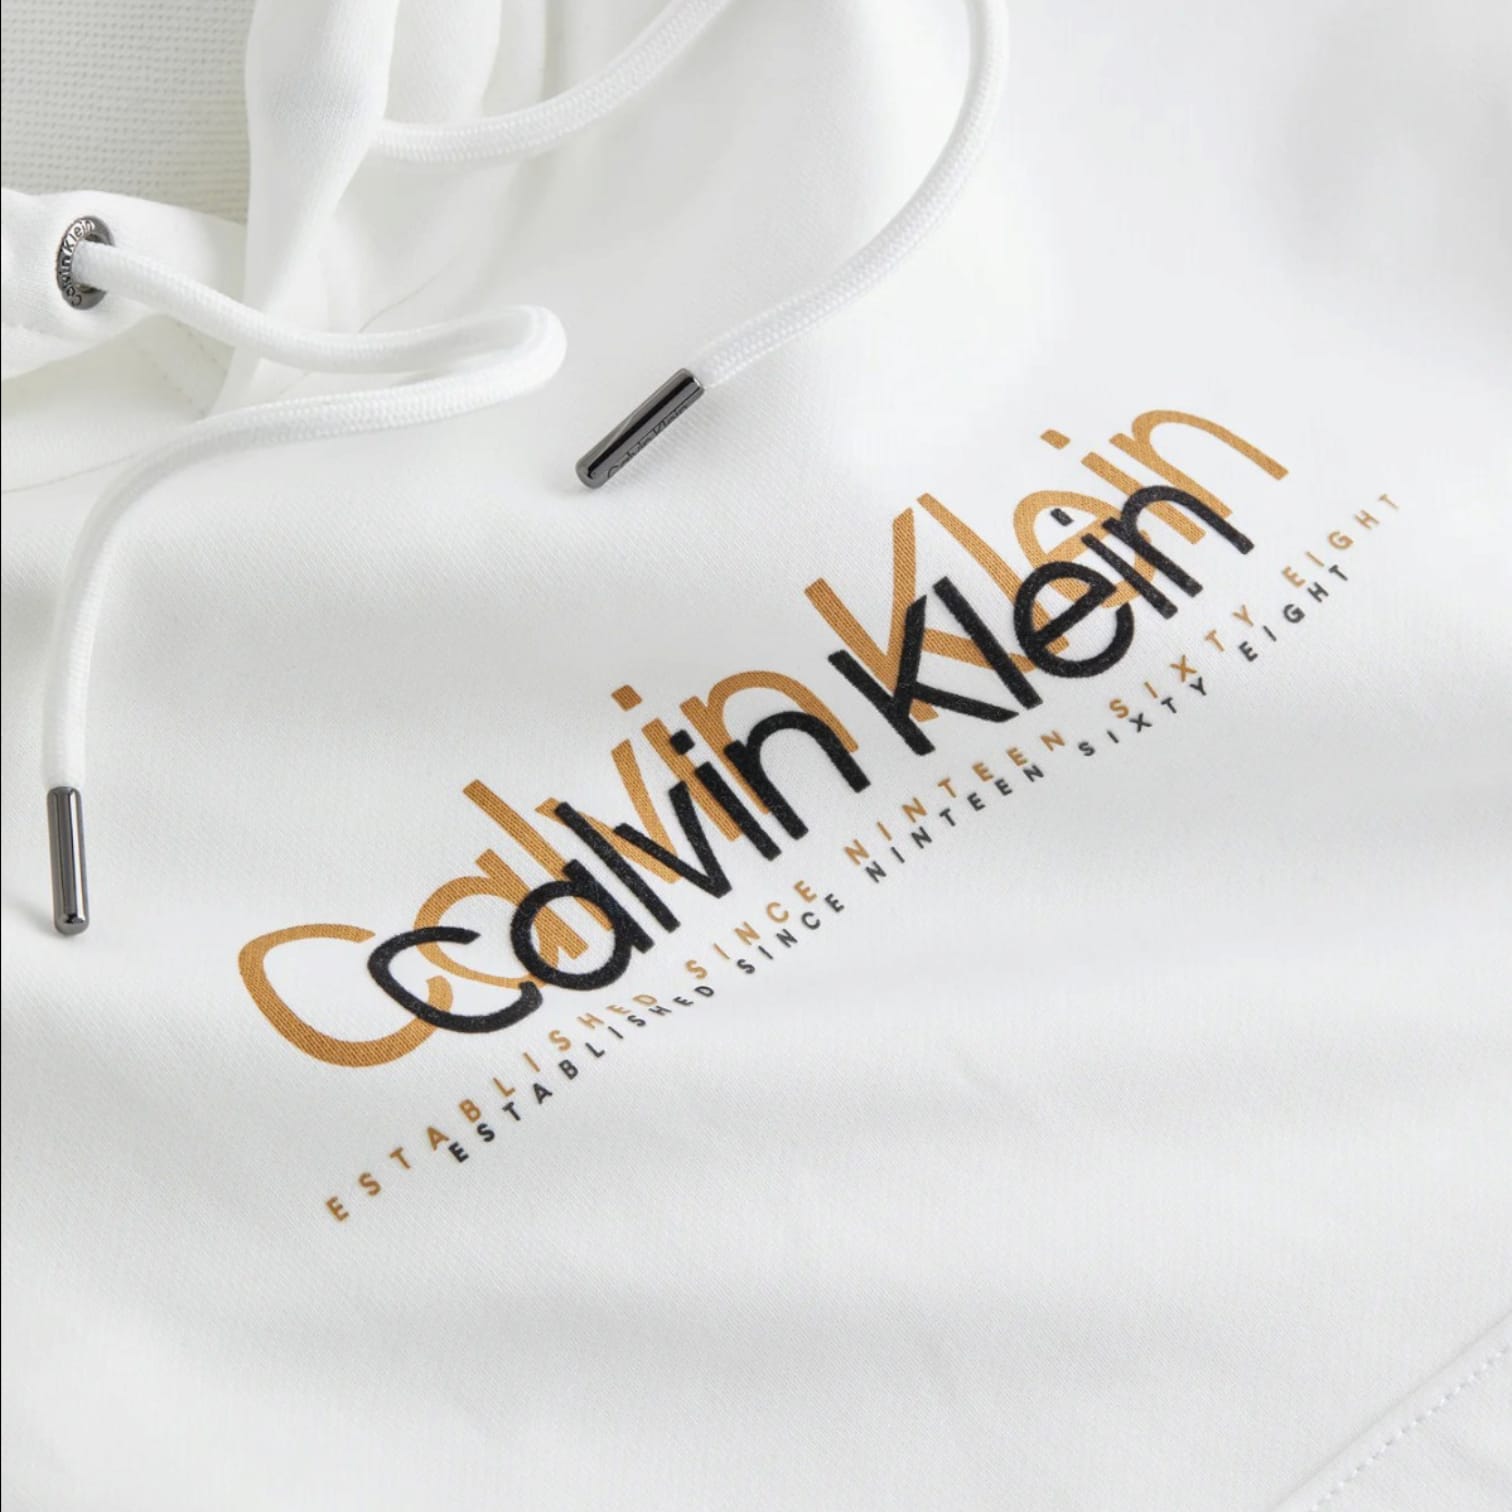 Calvin Klein Jeans Felpa Uomo